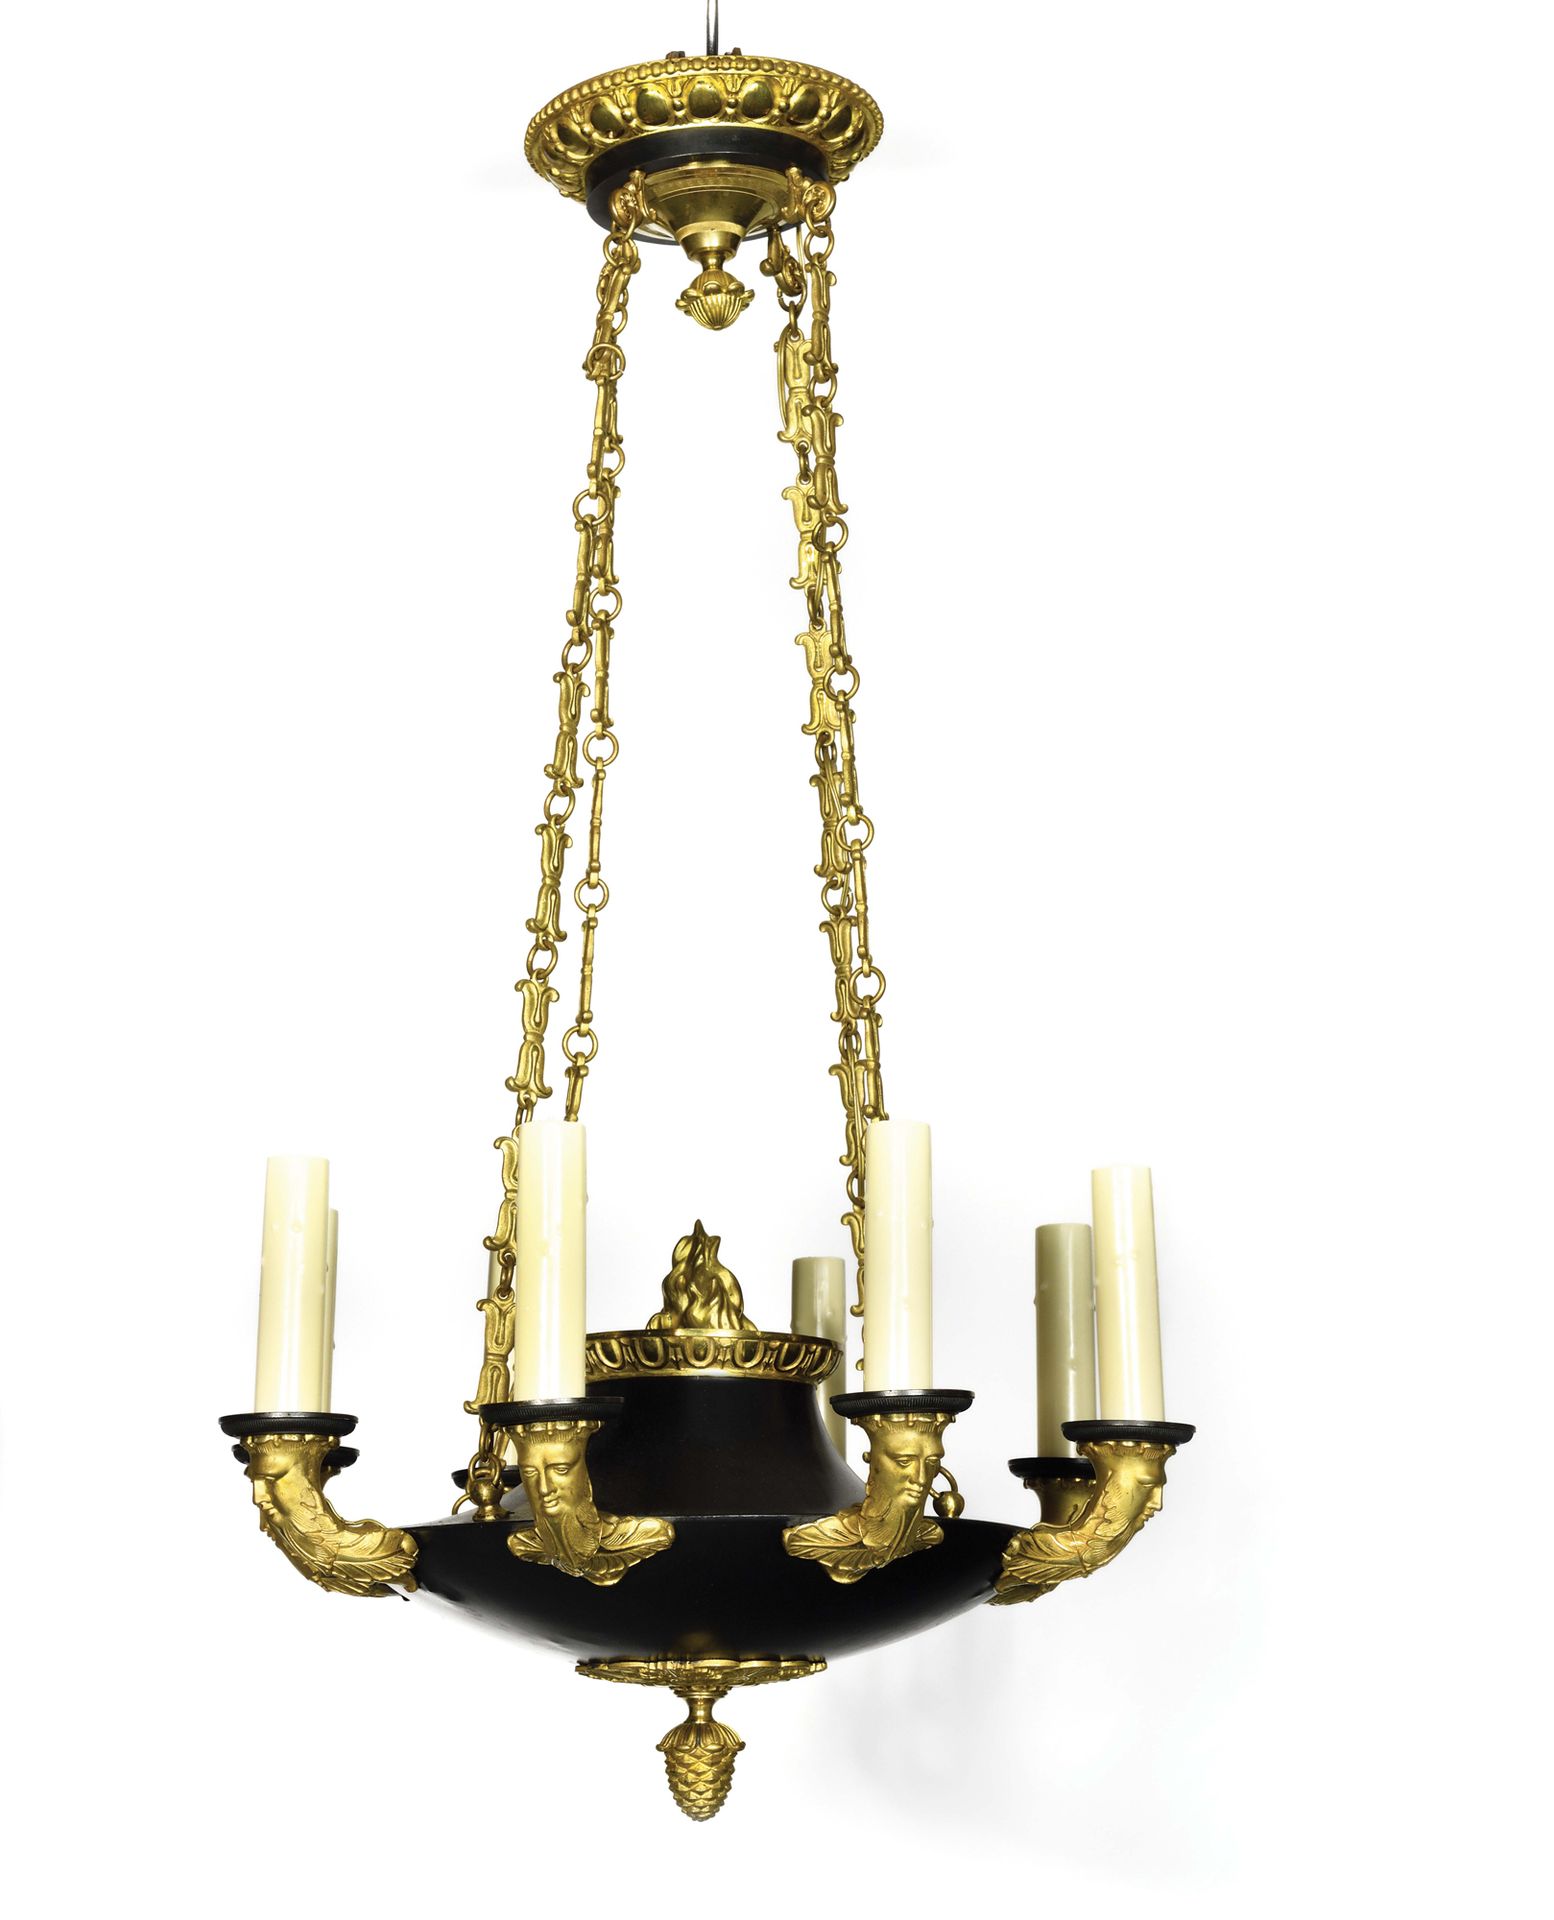 Null 古董灯吊灯

有八个镀金的青铜和镀金的金属板臂，装饰着大胡子的头。

19世纪前四分之一。

高度 : 70 cm - 直径 : 43 cm